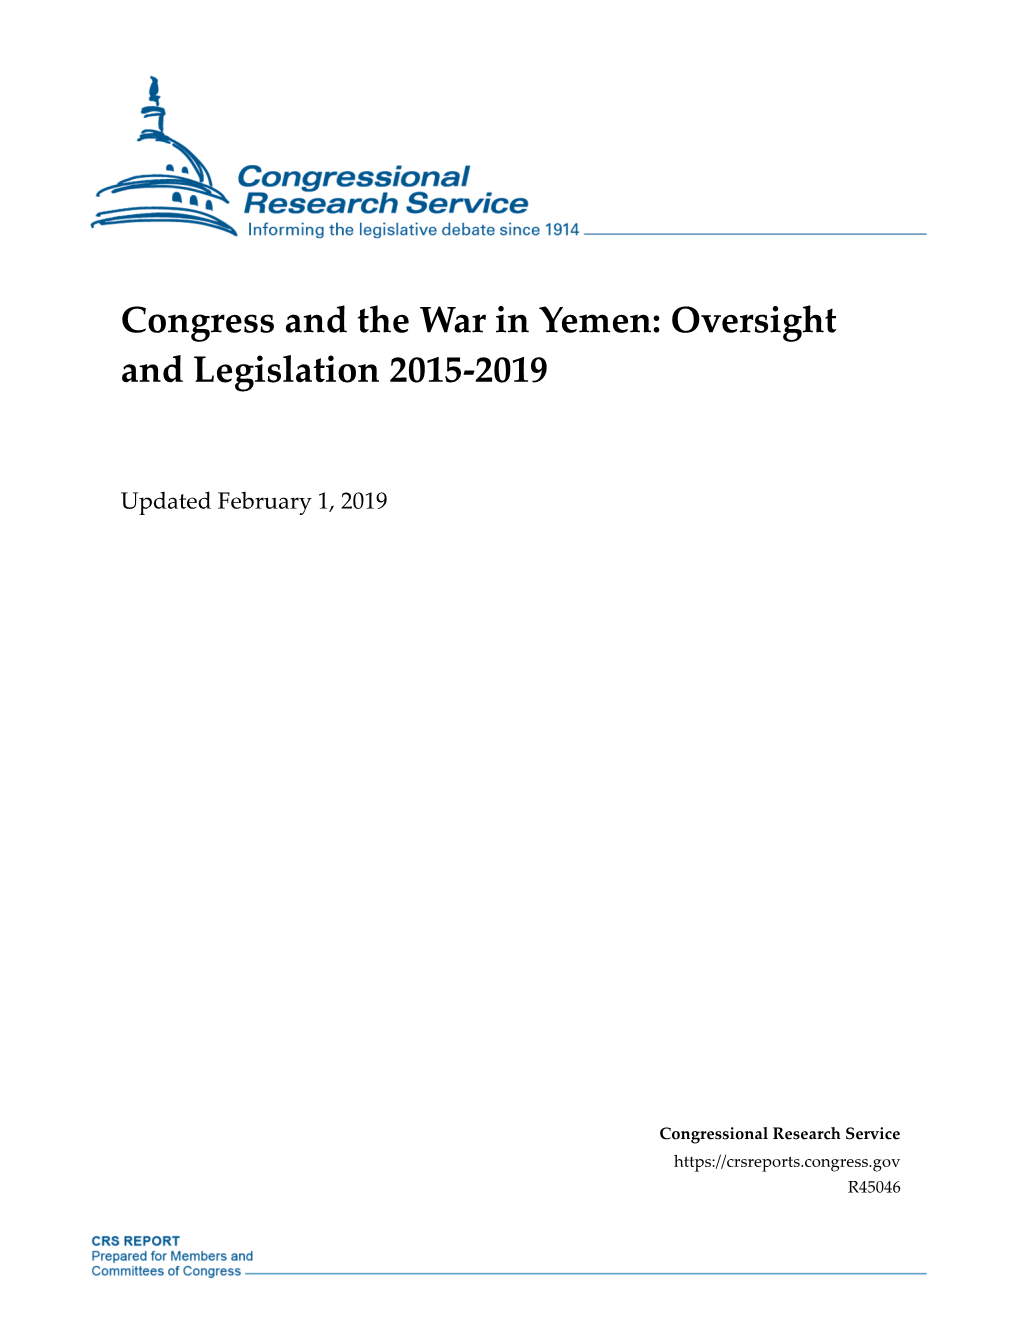 Congress and the War in Yemen: Oversight and Legislation 2015-2019